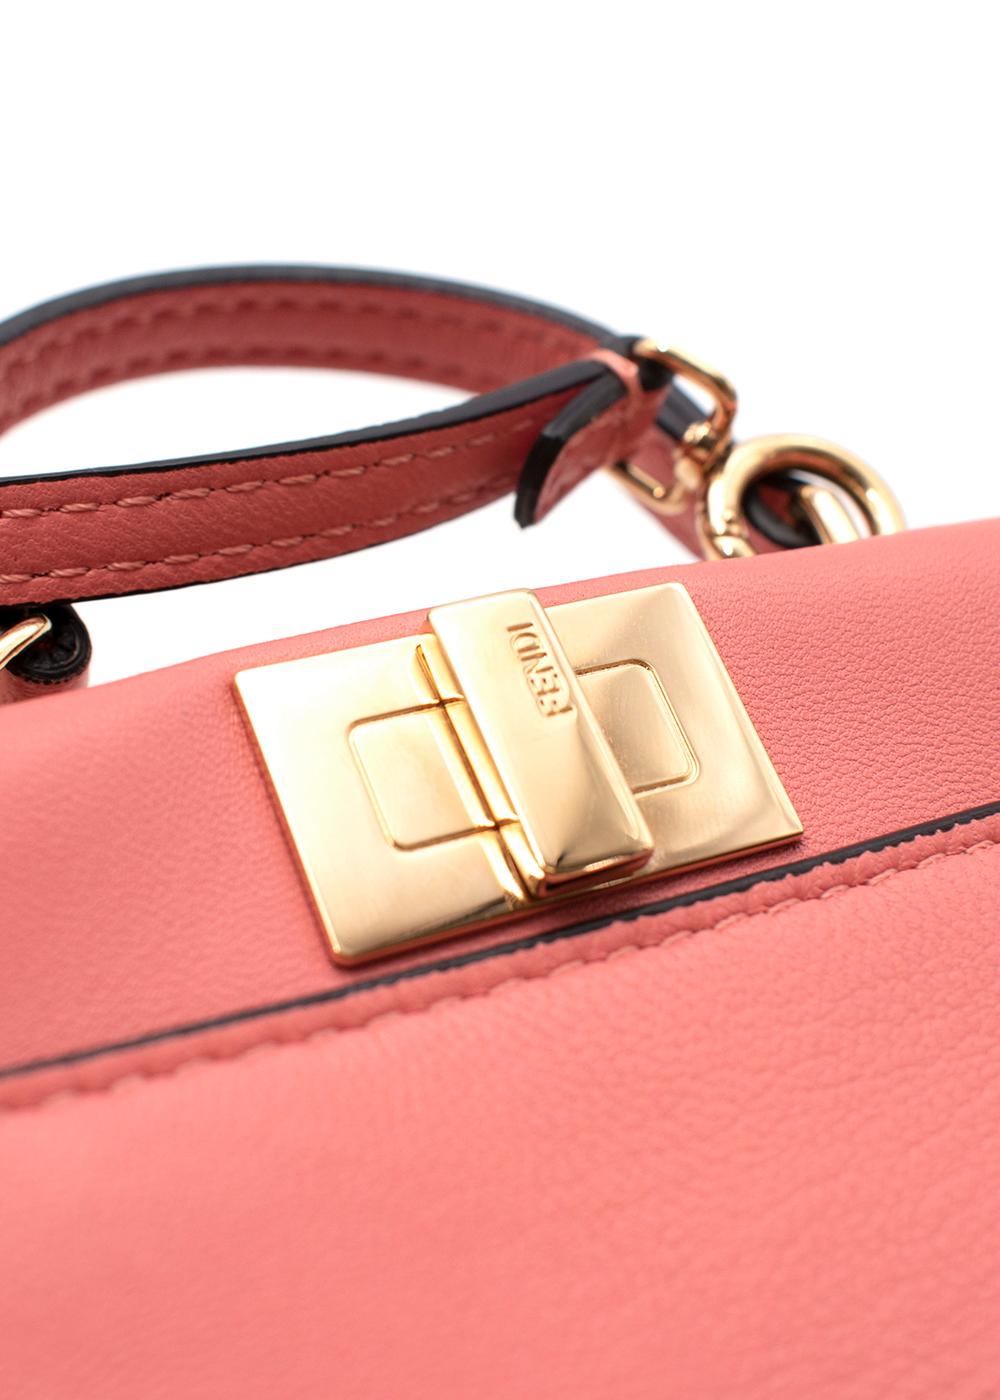 Fendi Coral-Pink Leather Mini Pocket Peekaboo Bag In Good Condition In London, GB